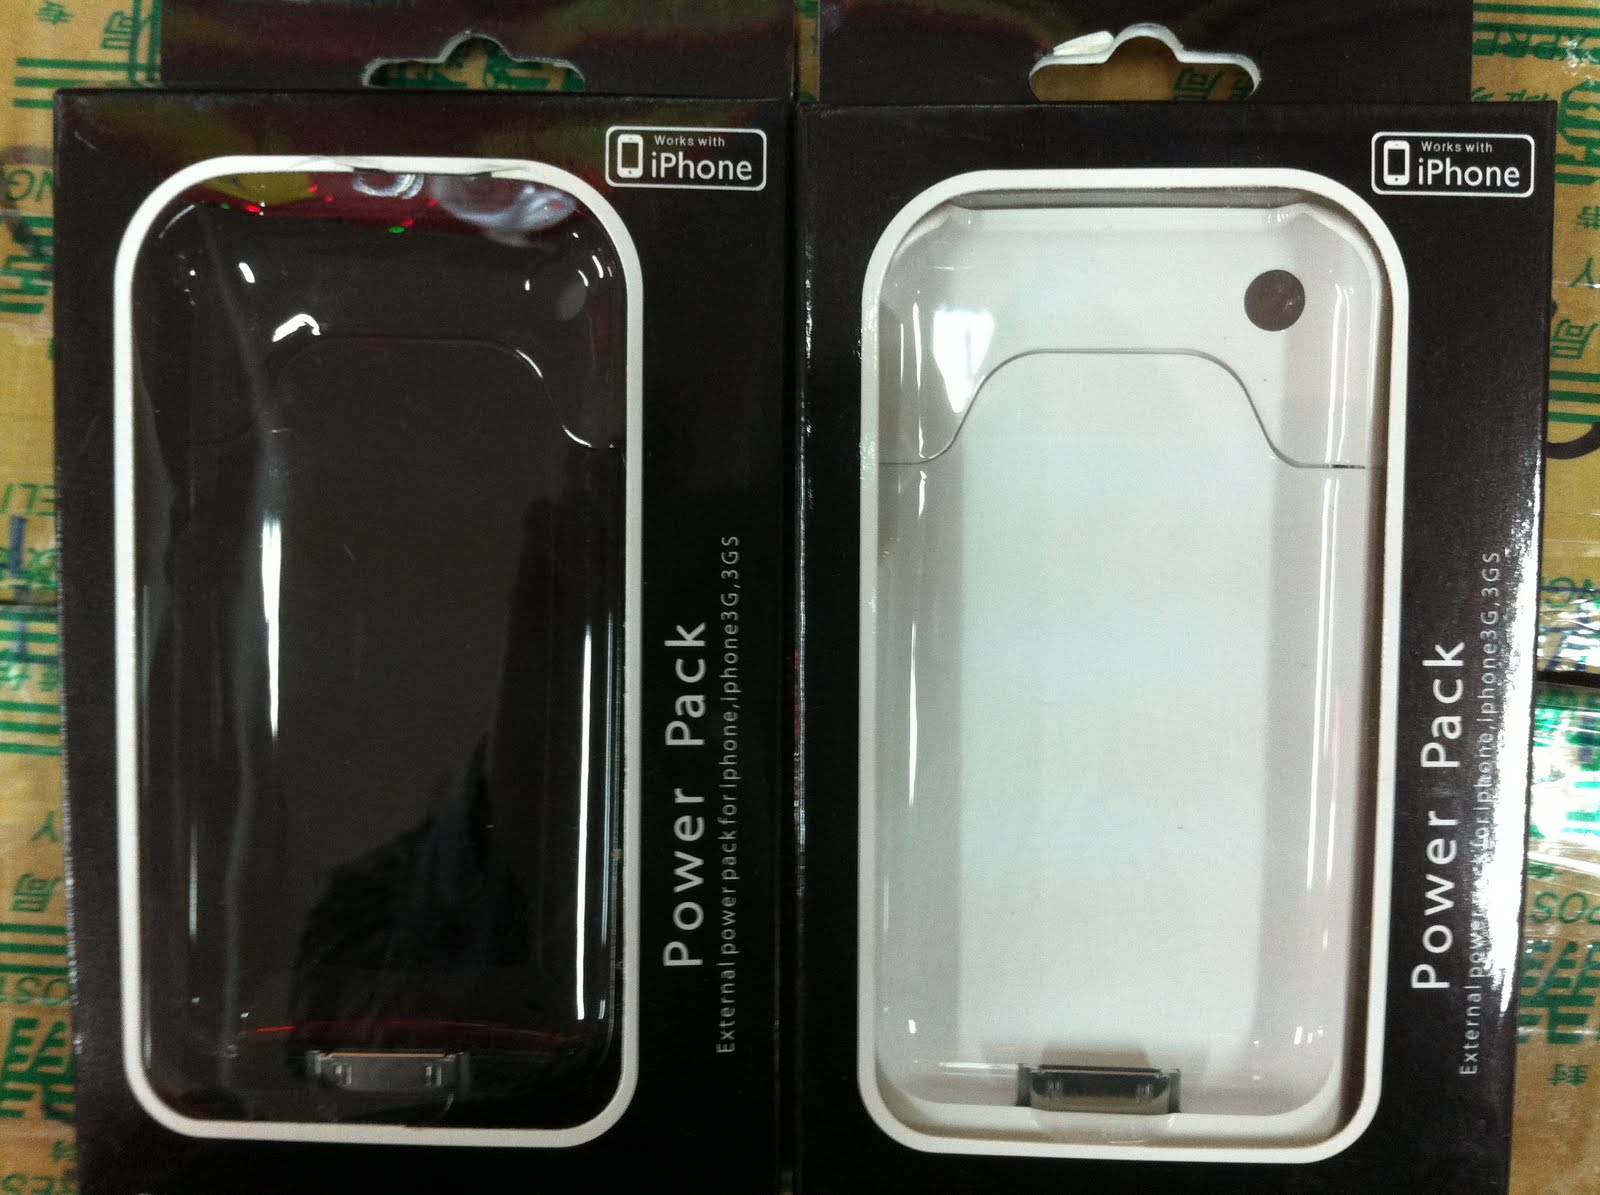 Iphone+3gs+black+vs+white